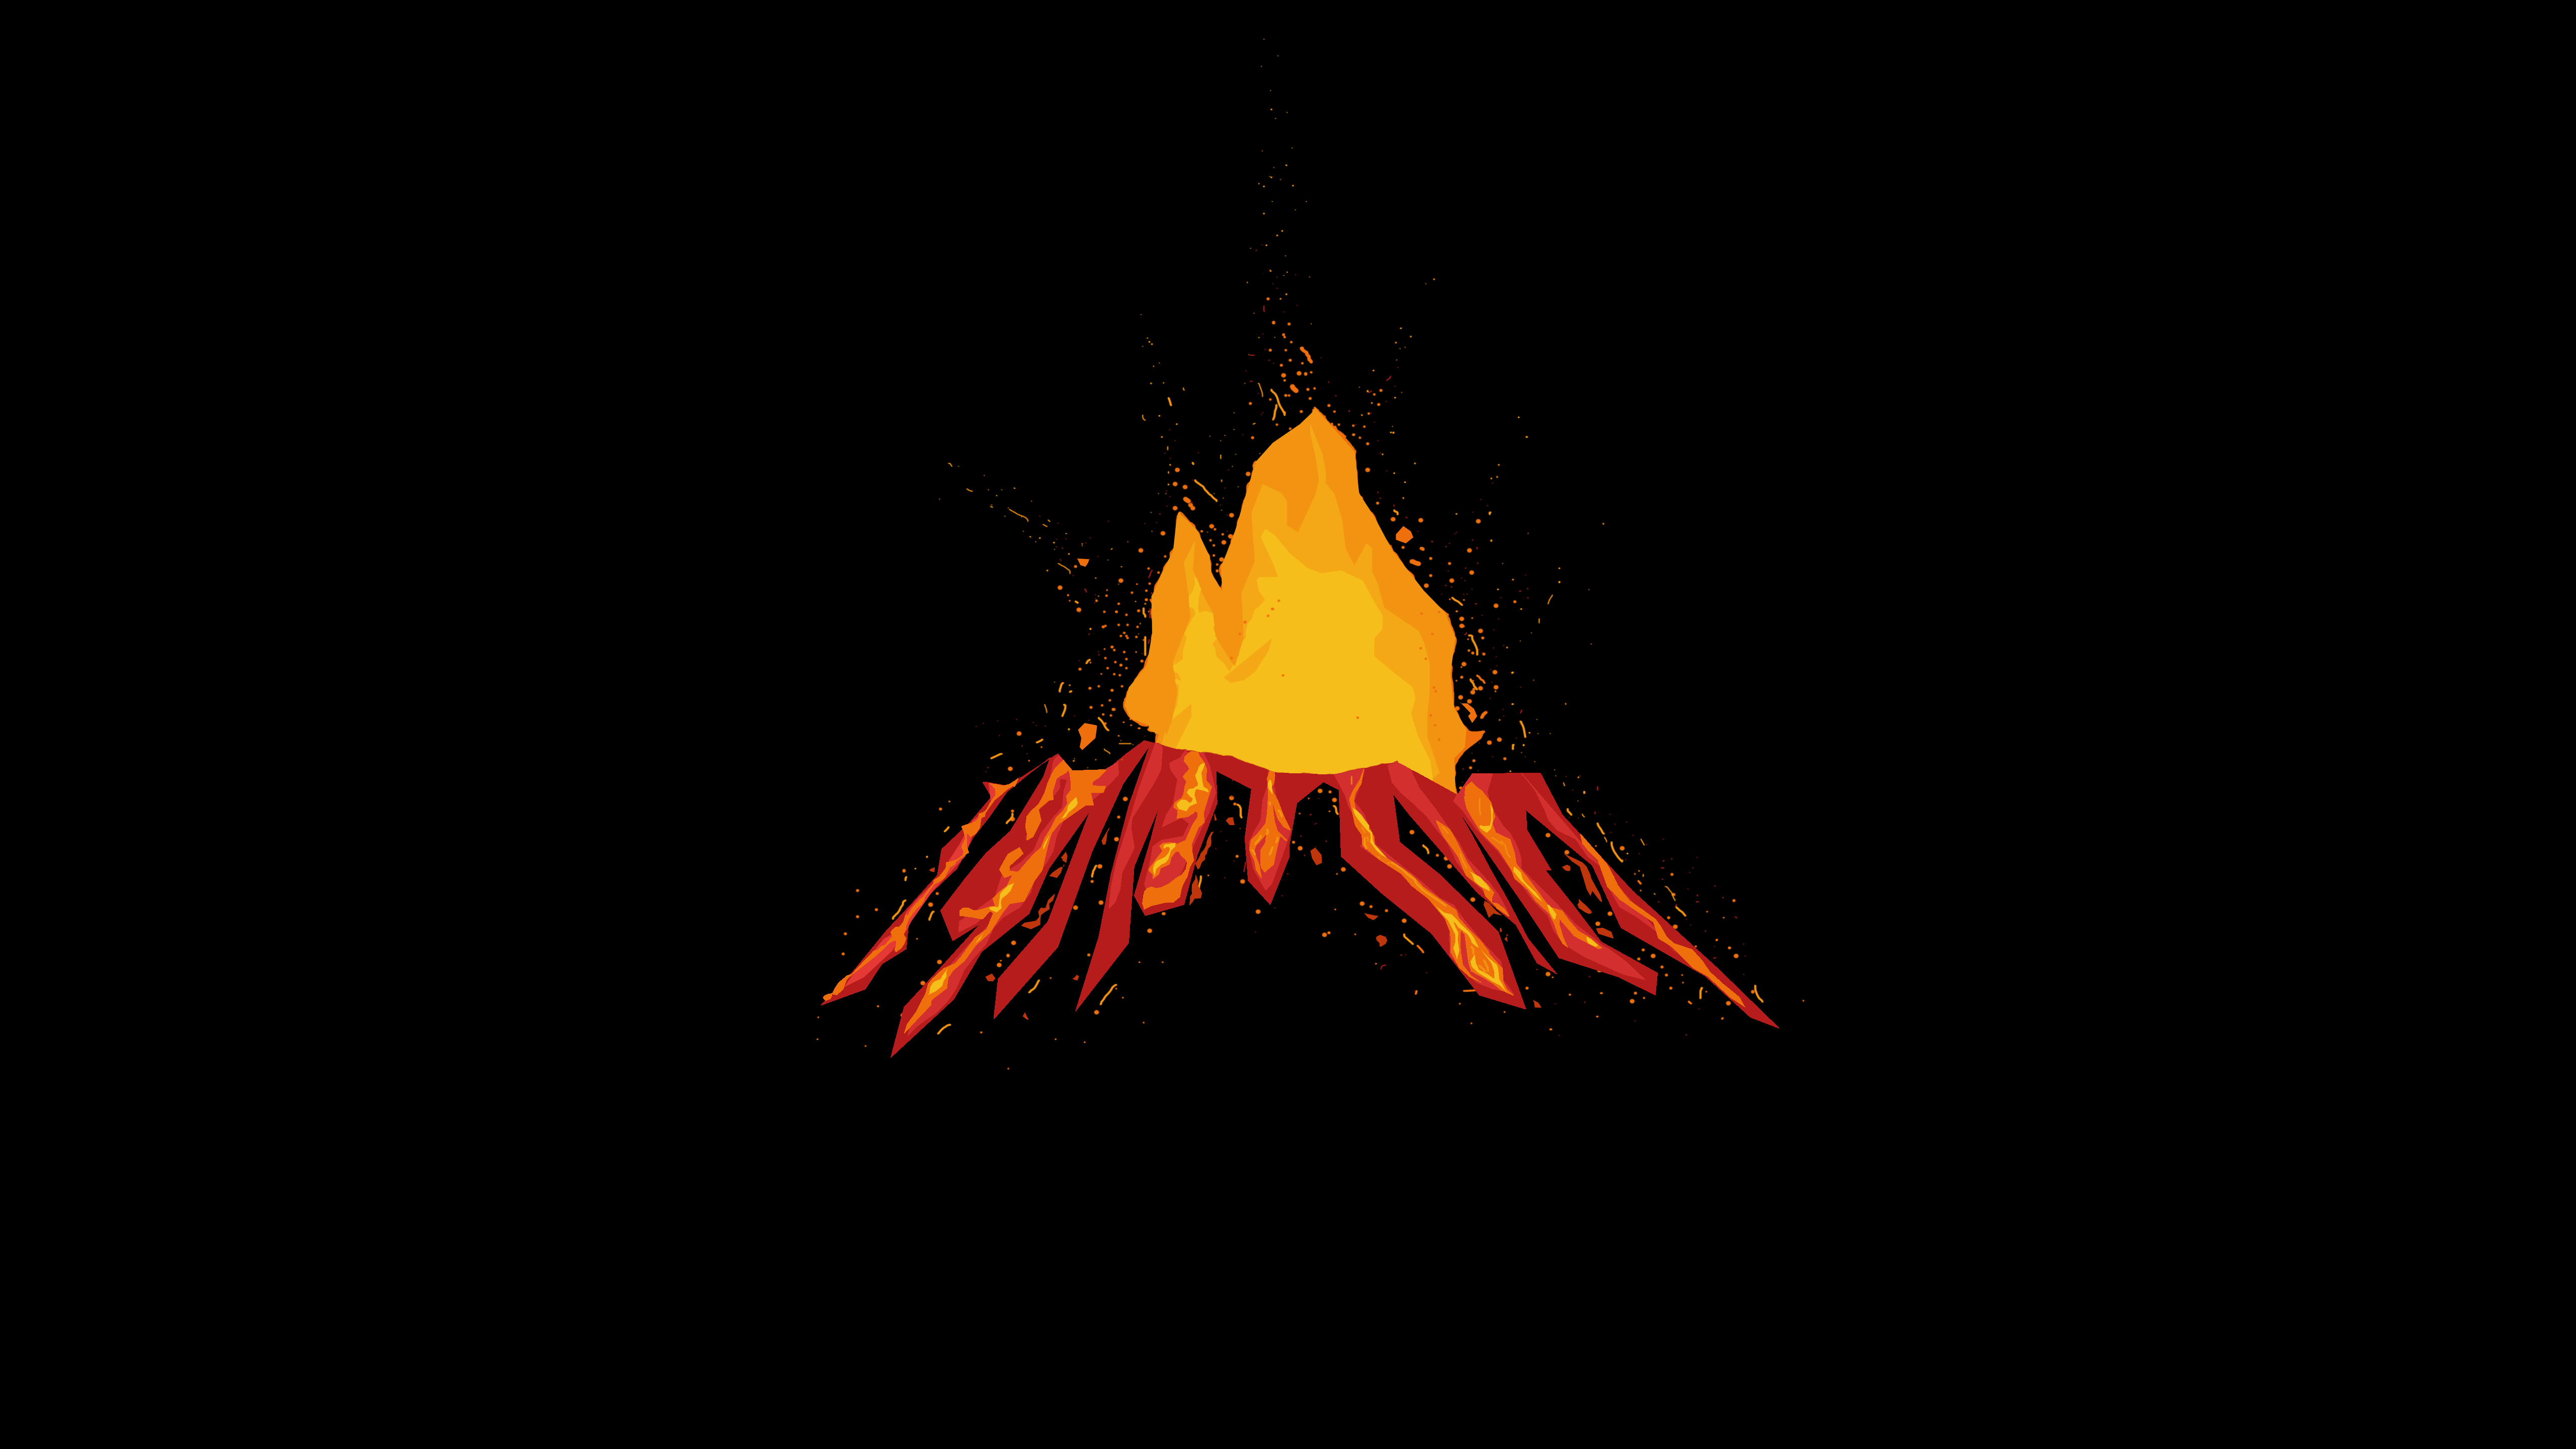 General 5120x2880 minimalism artwork red yellow volcano volcanic eruption digital art simple background